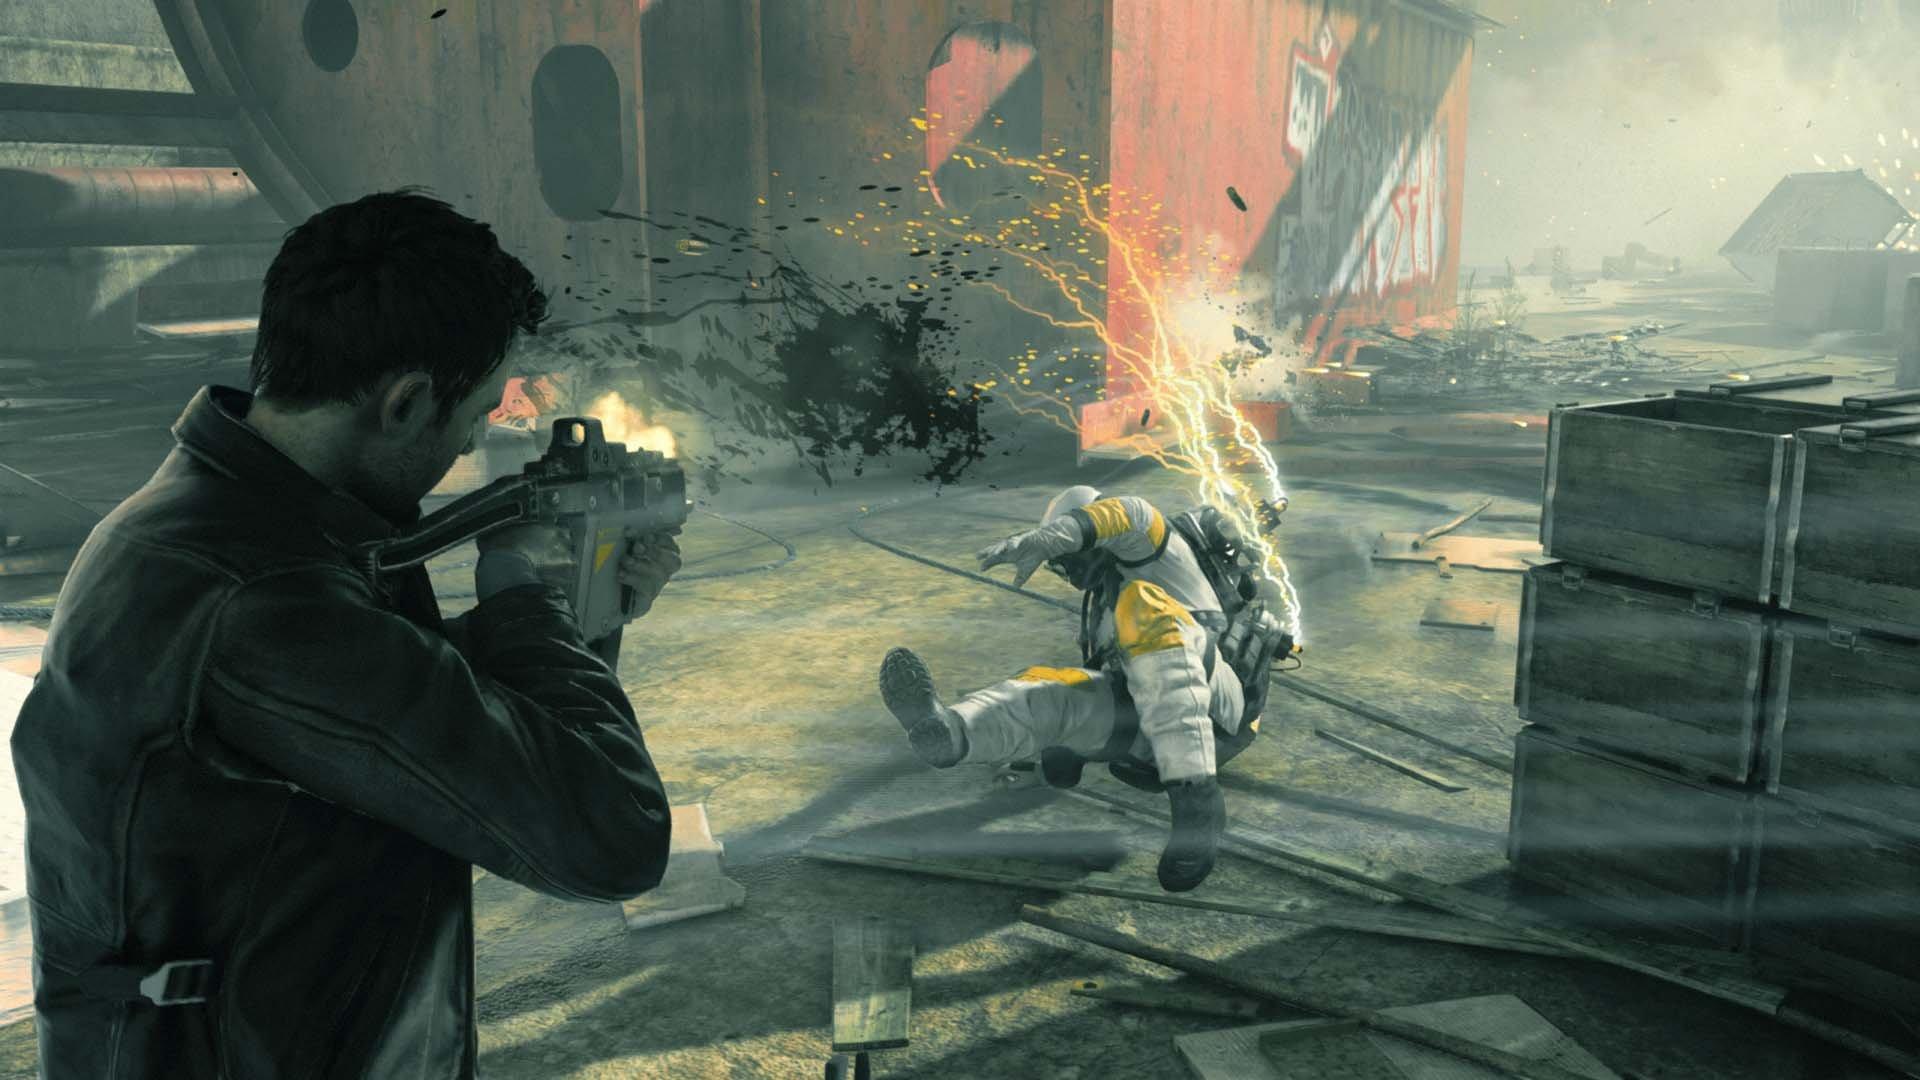 Metal Gear Survive + Super Bomberman + Quantum Break - Xbox One